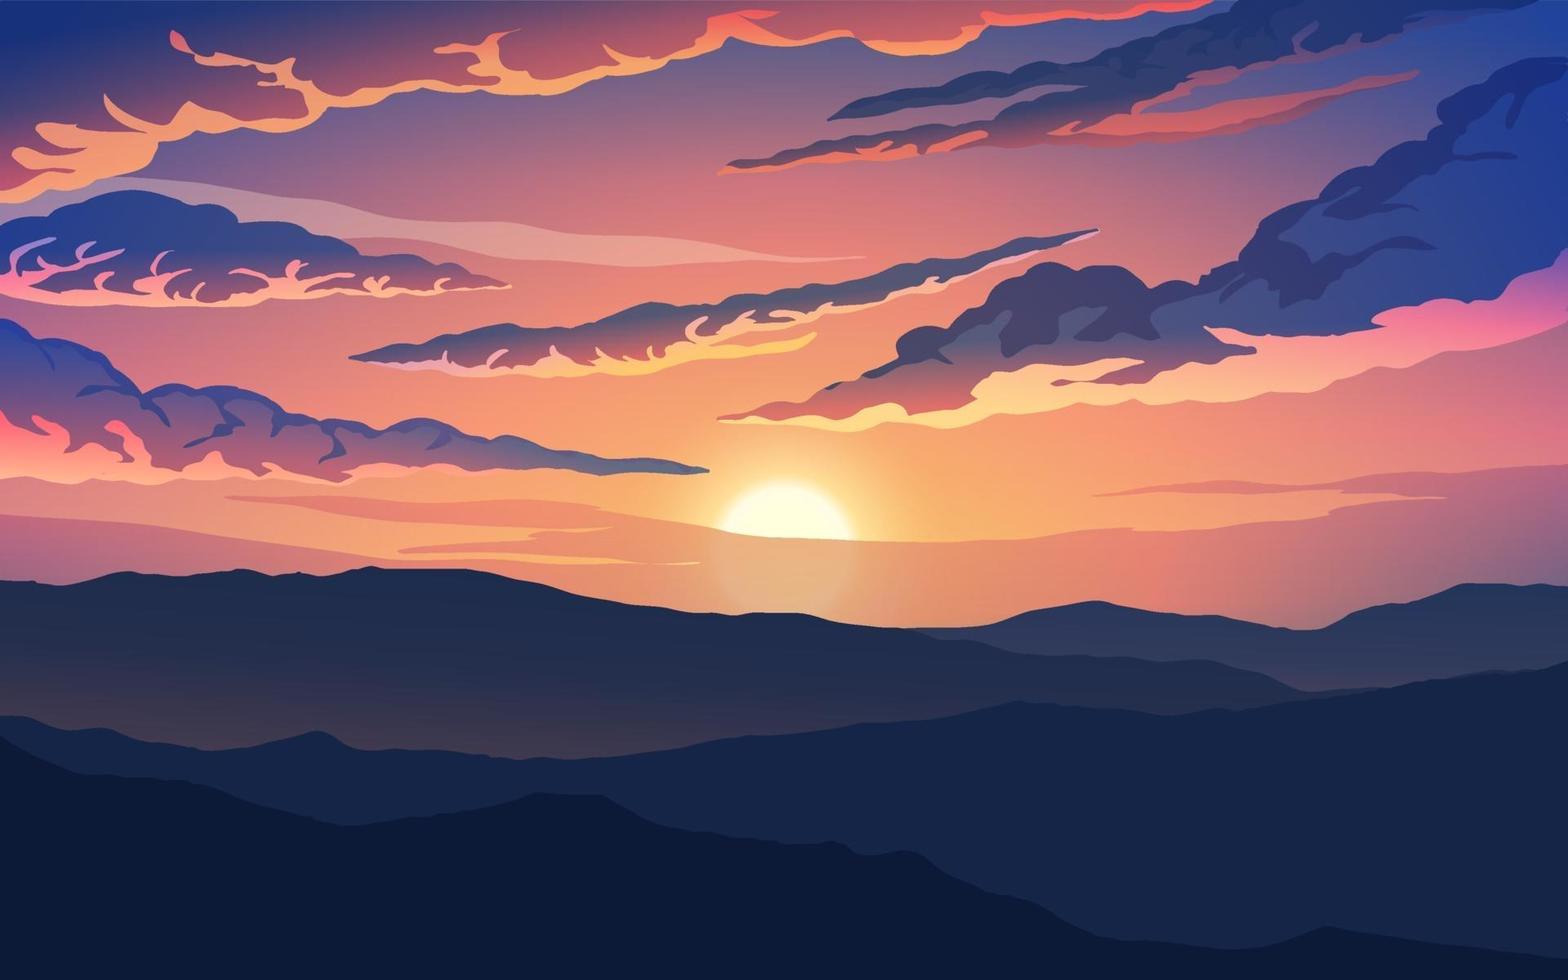 Cloudy Mountain Sunset Scene vector